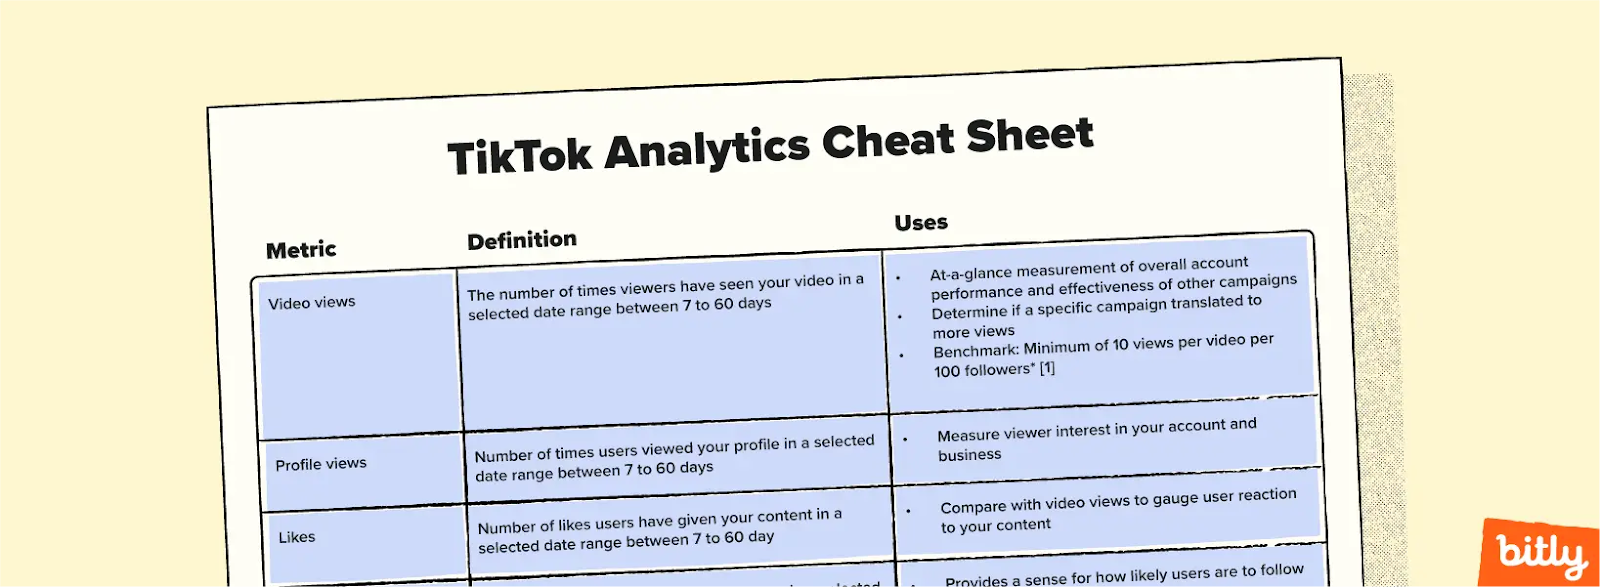 A sneak peek view of the TikTok analytics cheat sheet from Bitly. 